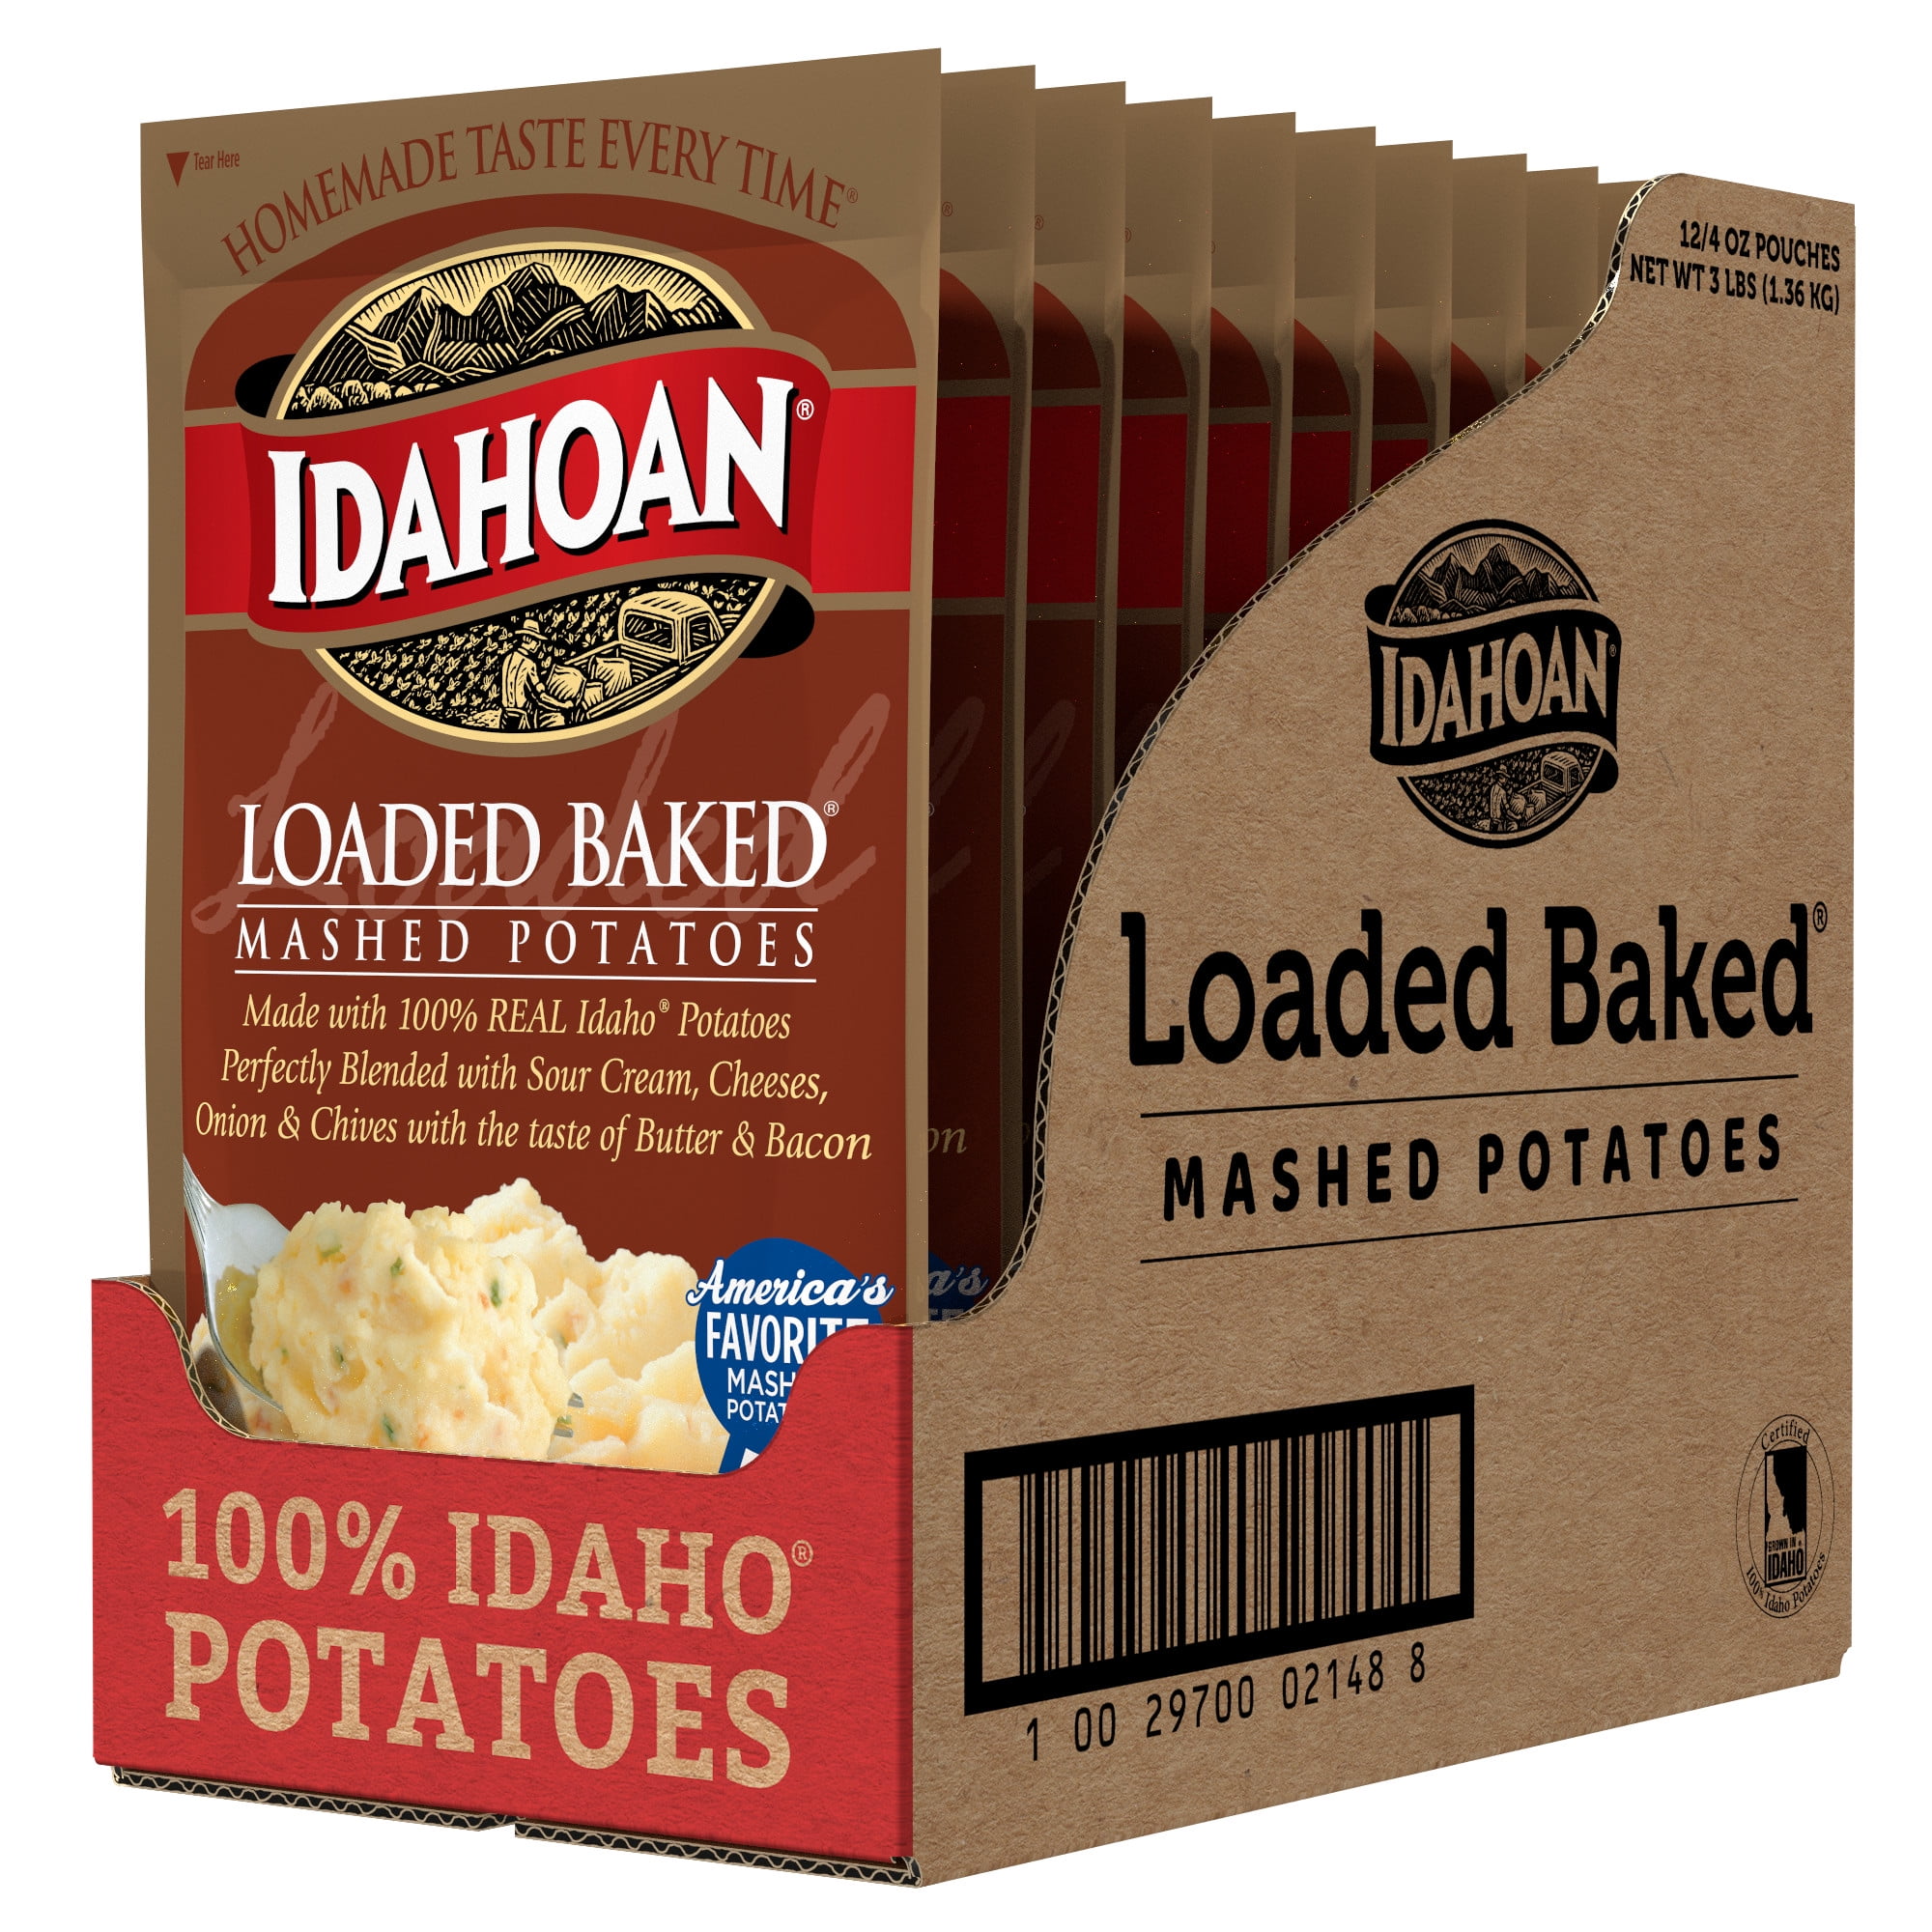 Idahoan® Potato Shreds seasoned with Hidden Valley® Original Ranch®, 1.7 oz  (2 or 12 count)